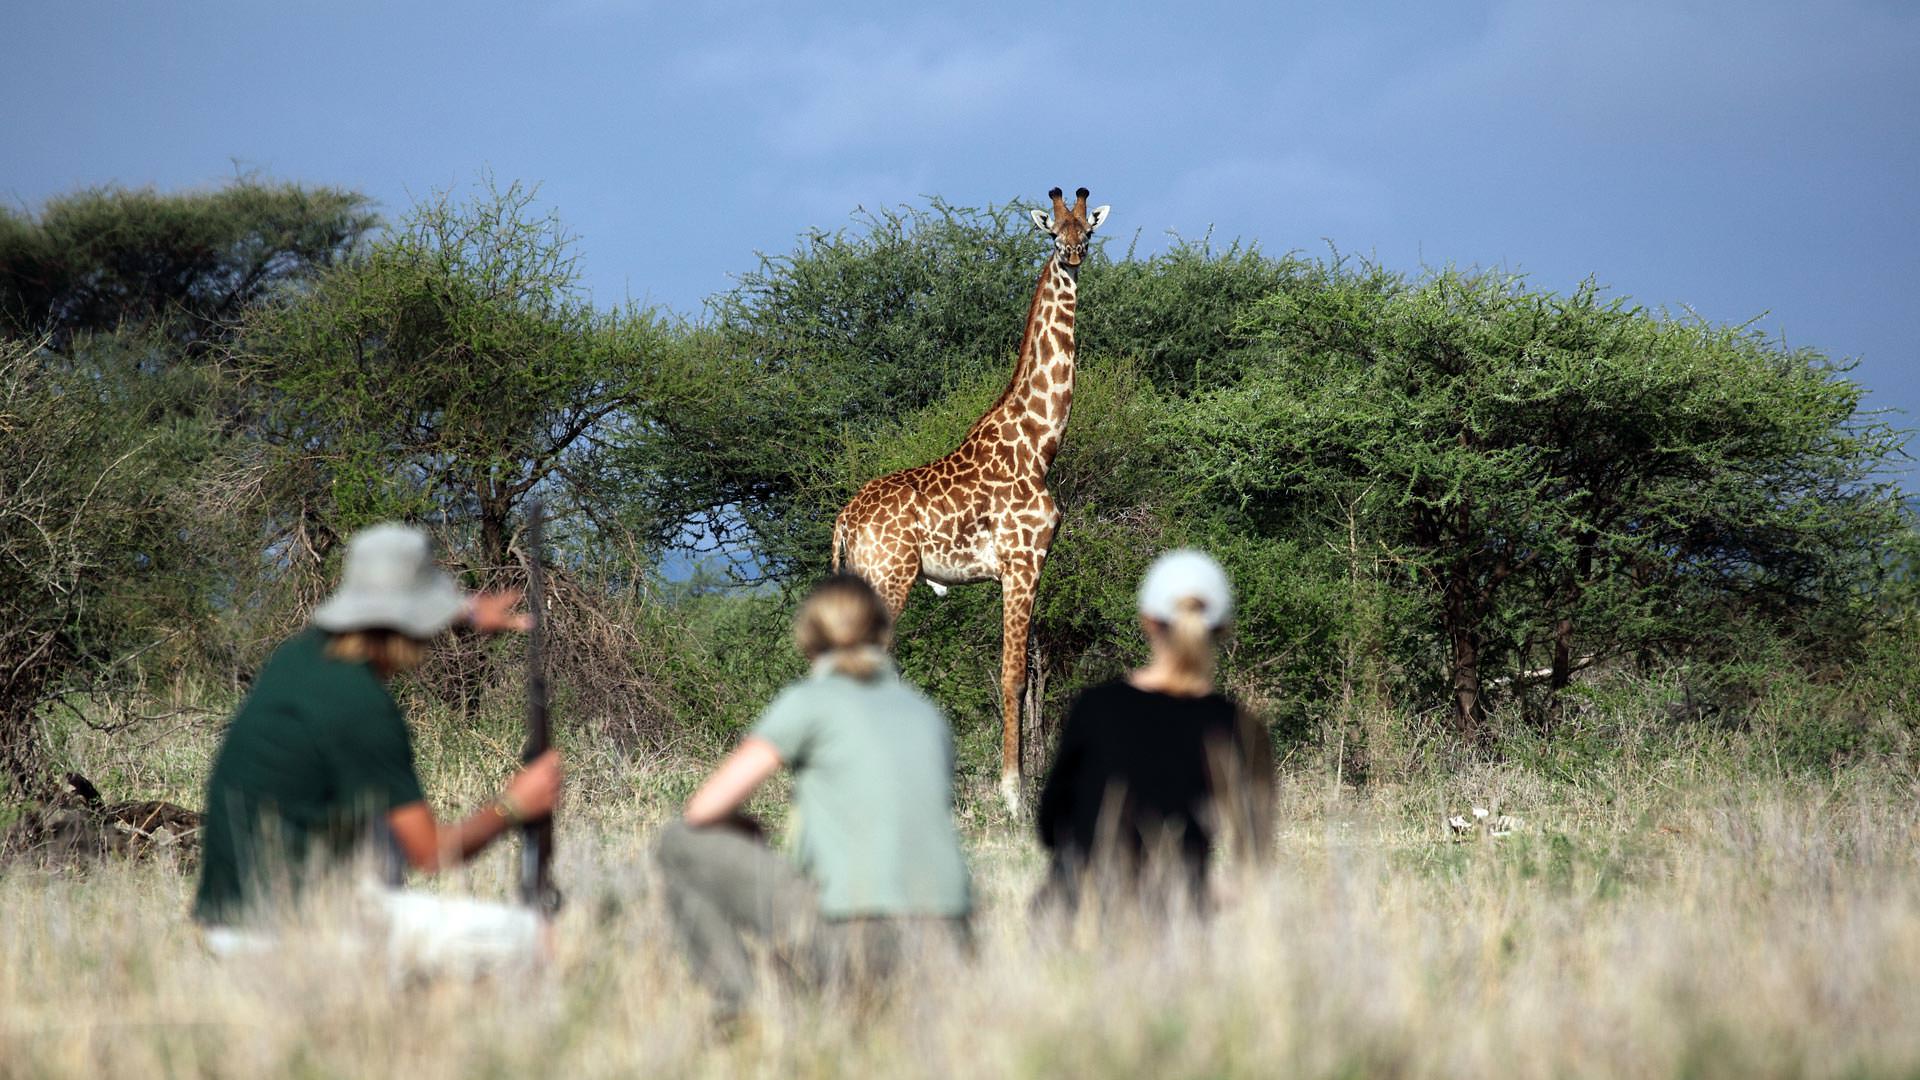 Approaching giraffe on foot at Manyara Ranch Conservancy